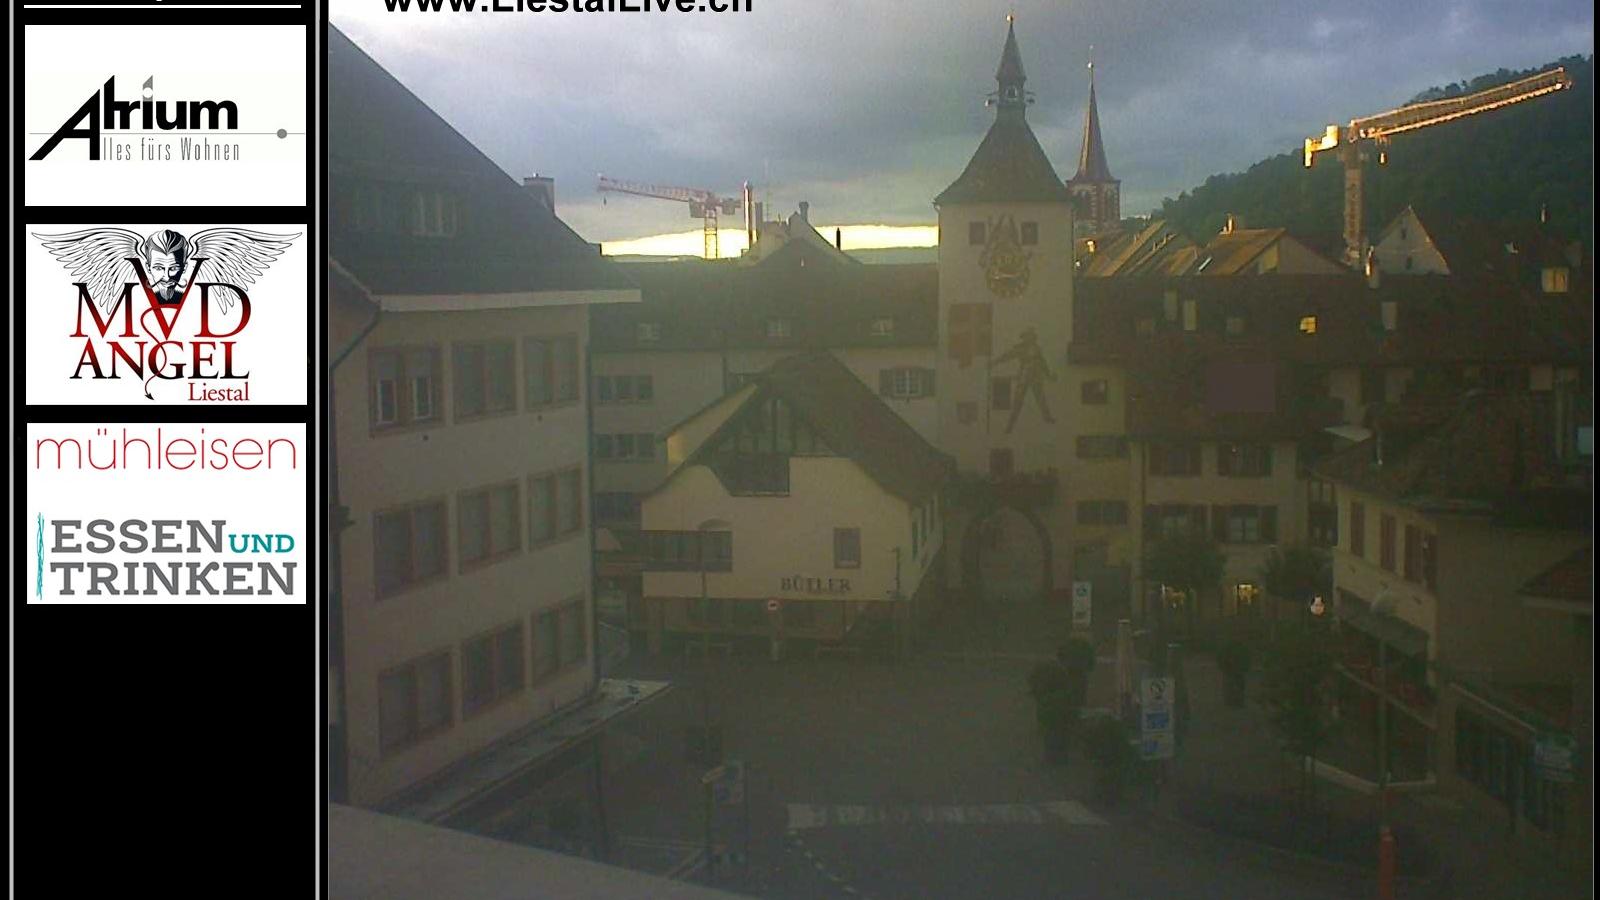 Webcams around Liestal - meteoblue